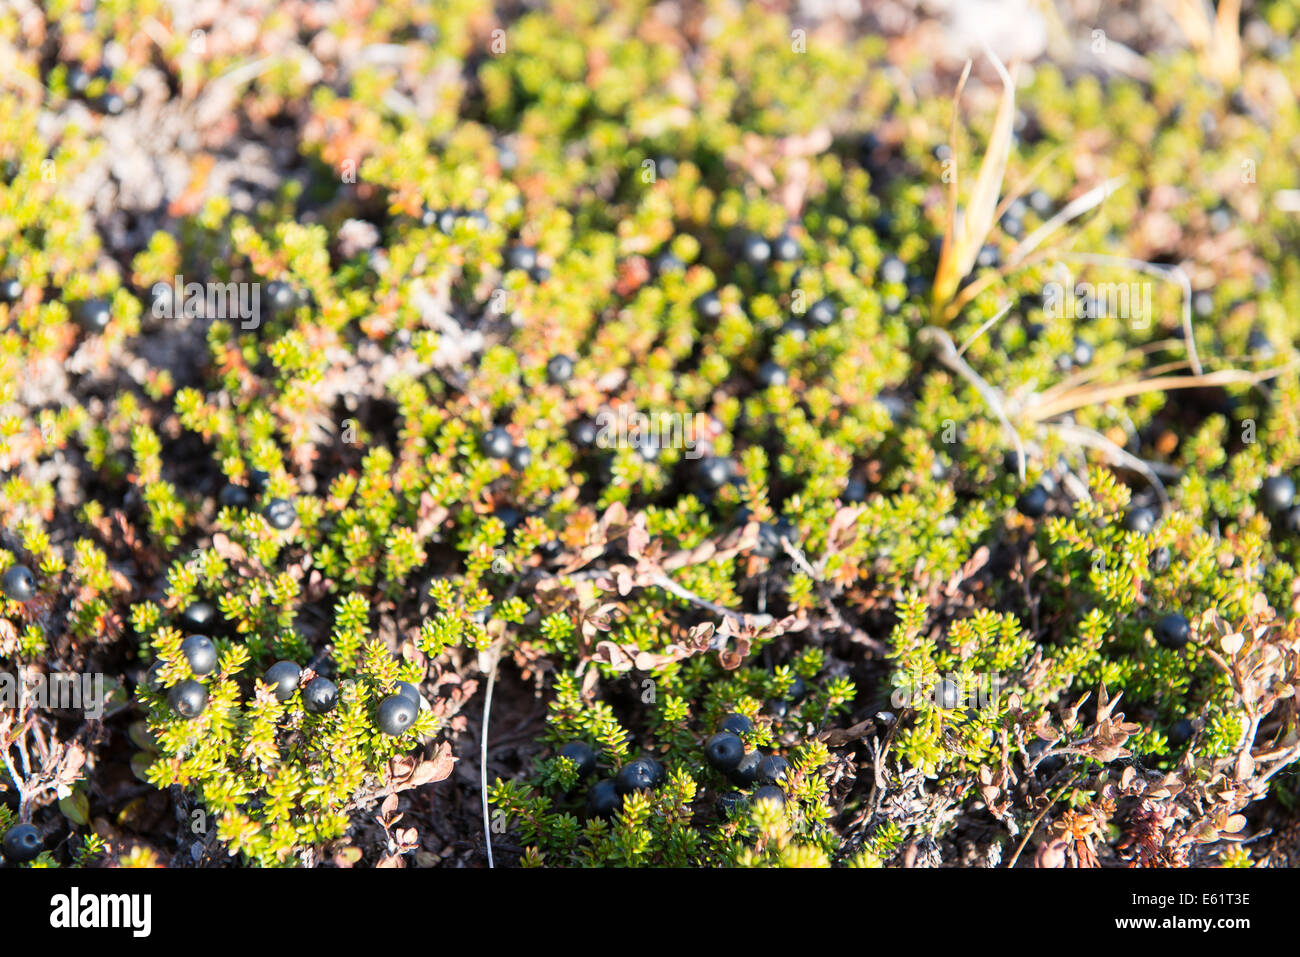 Wild black crowberries on Empetrum nigrum bush in Greenland with ripe fruits Stock Photo